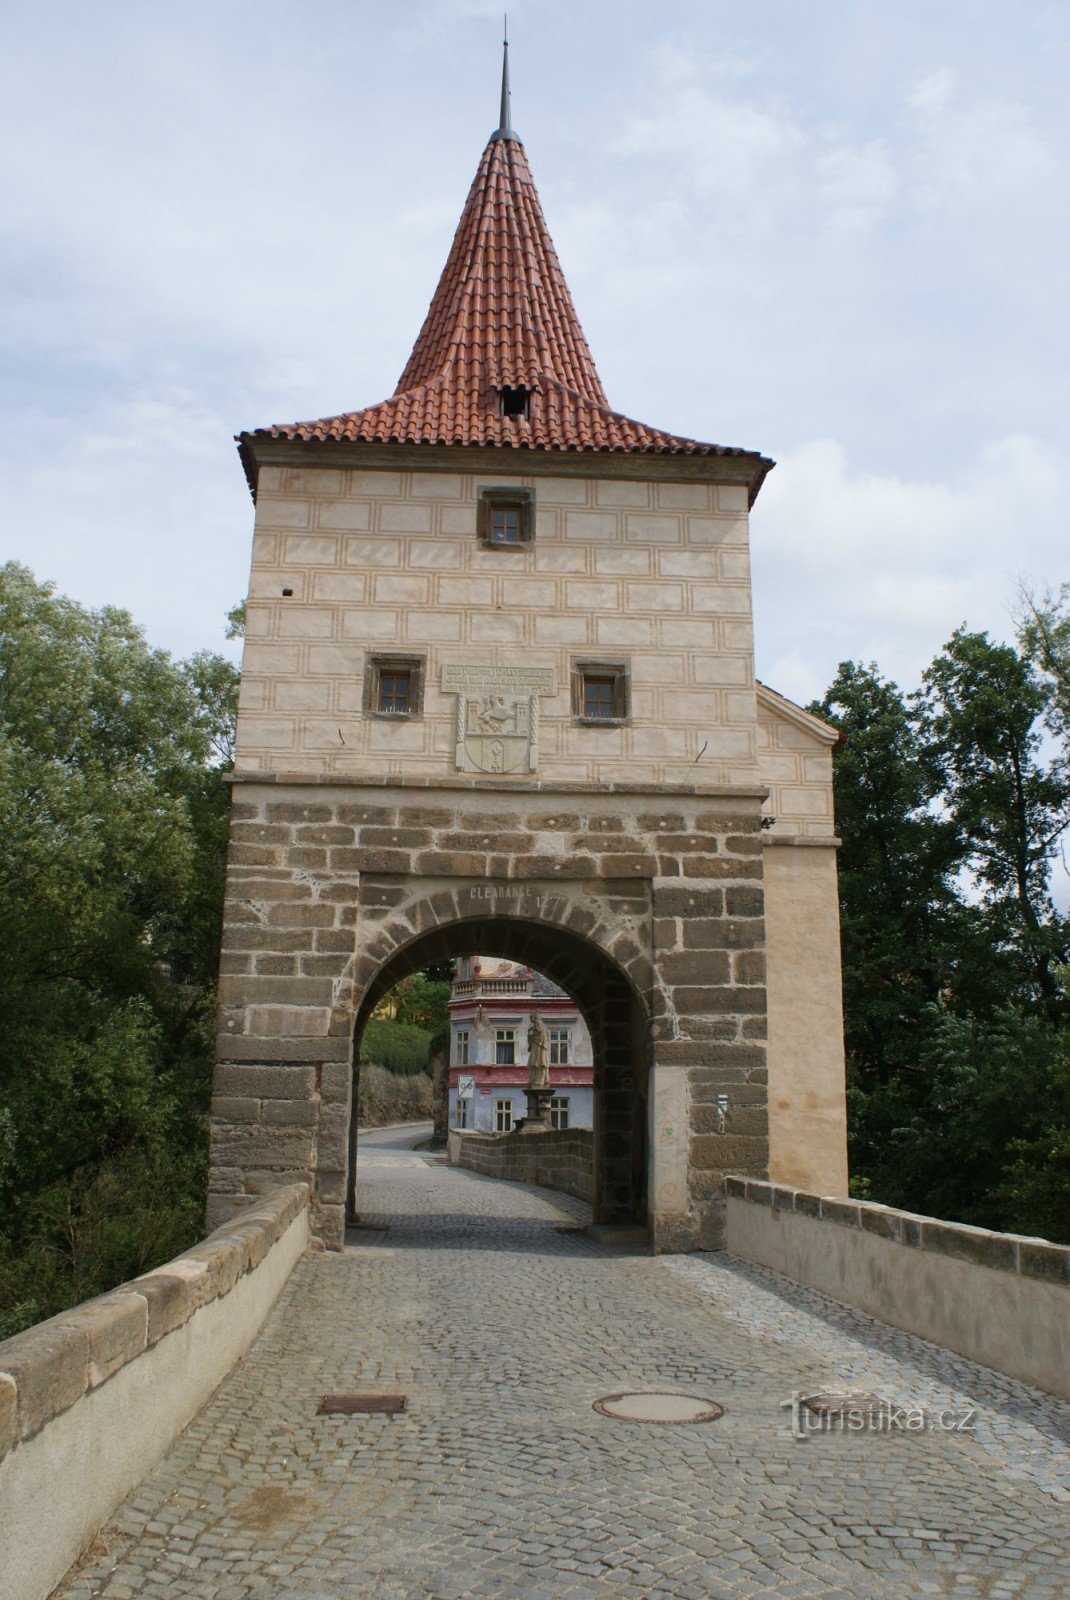 Brama mostowa